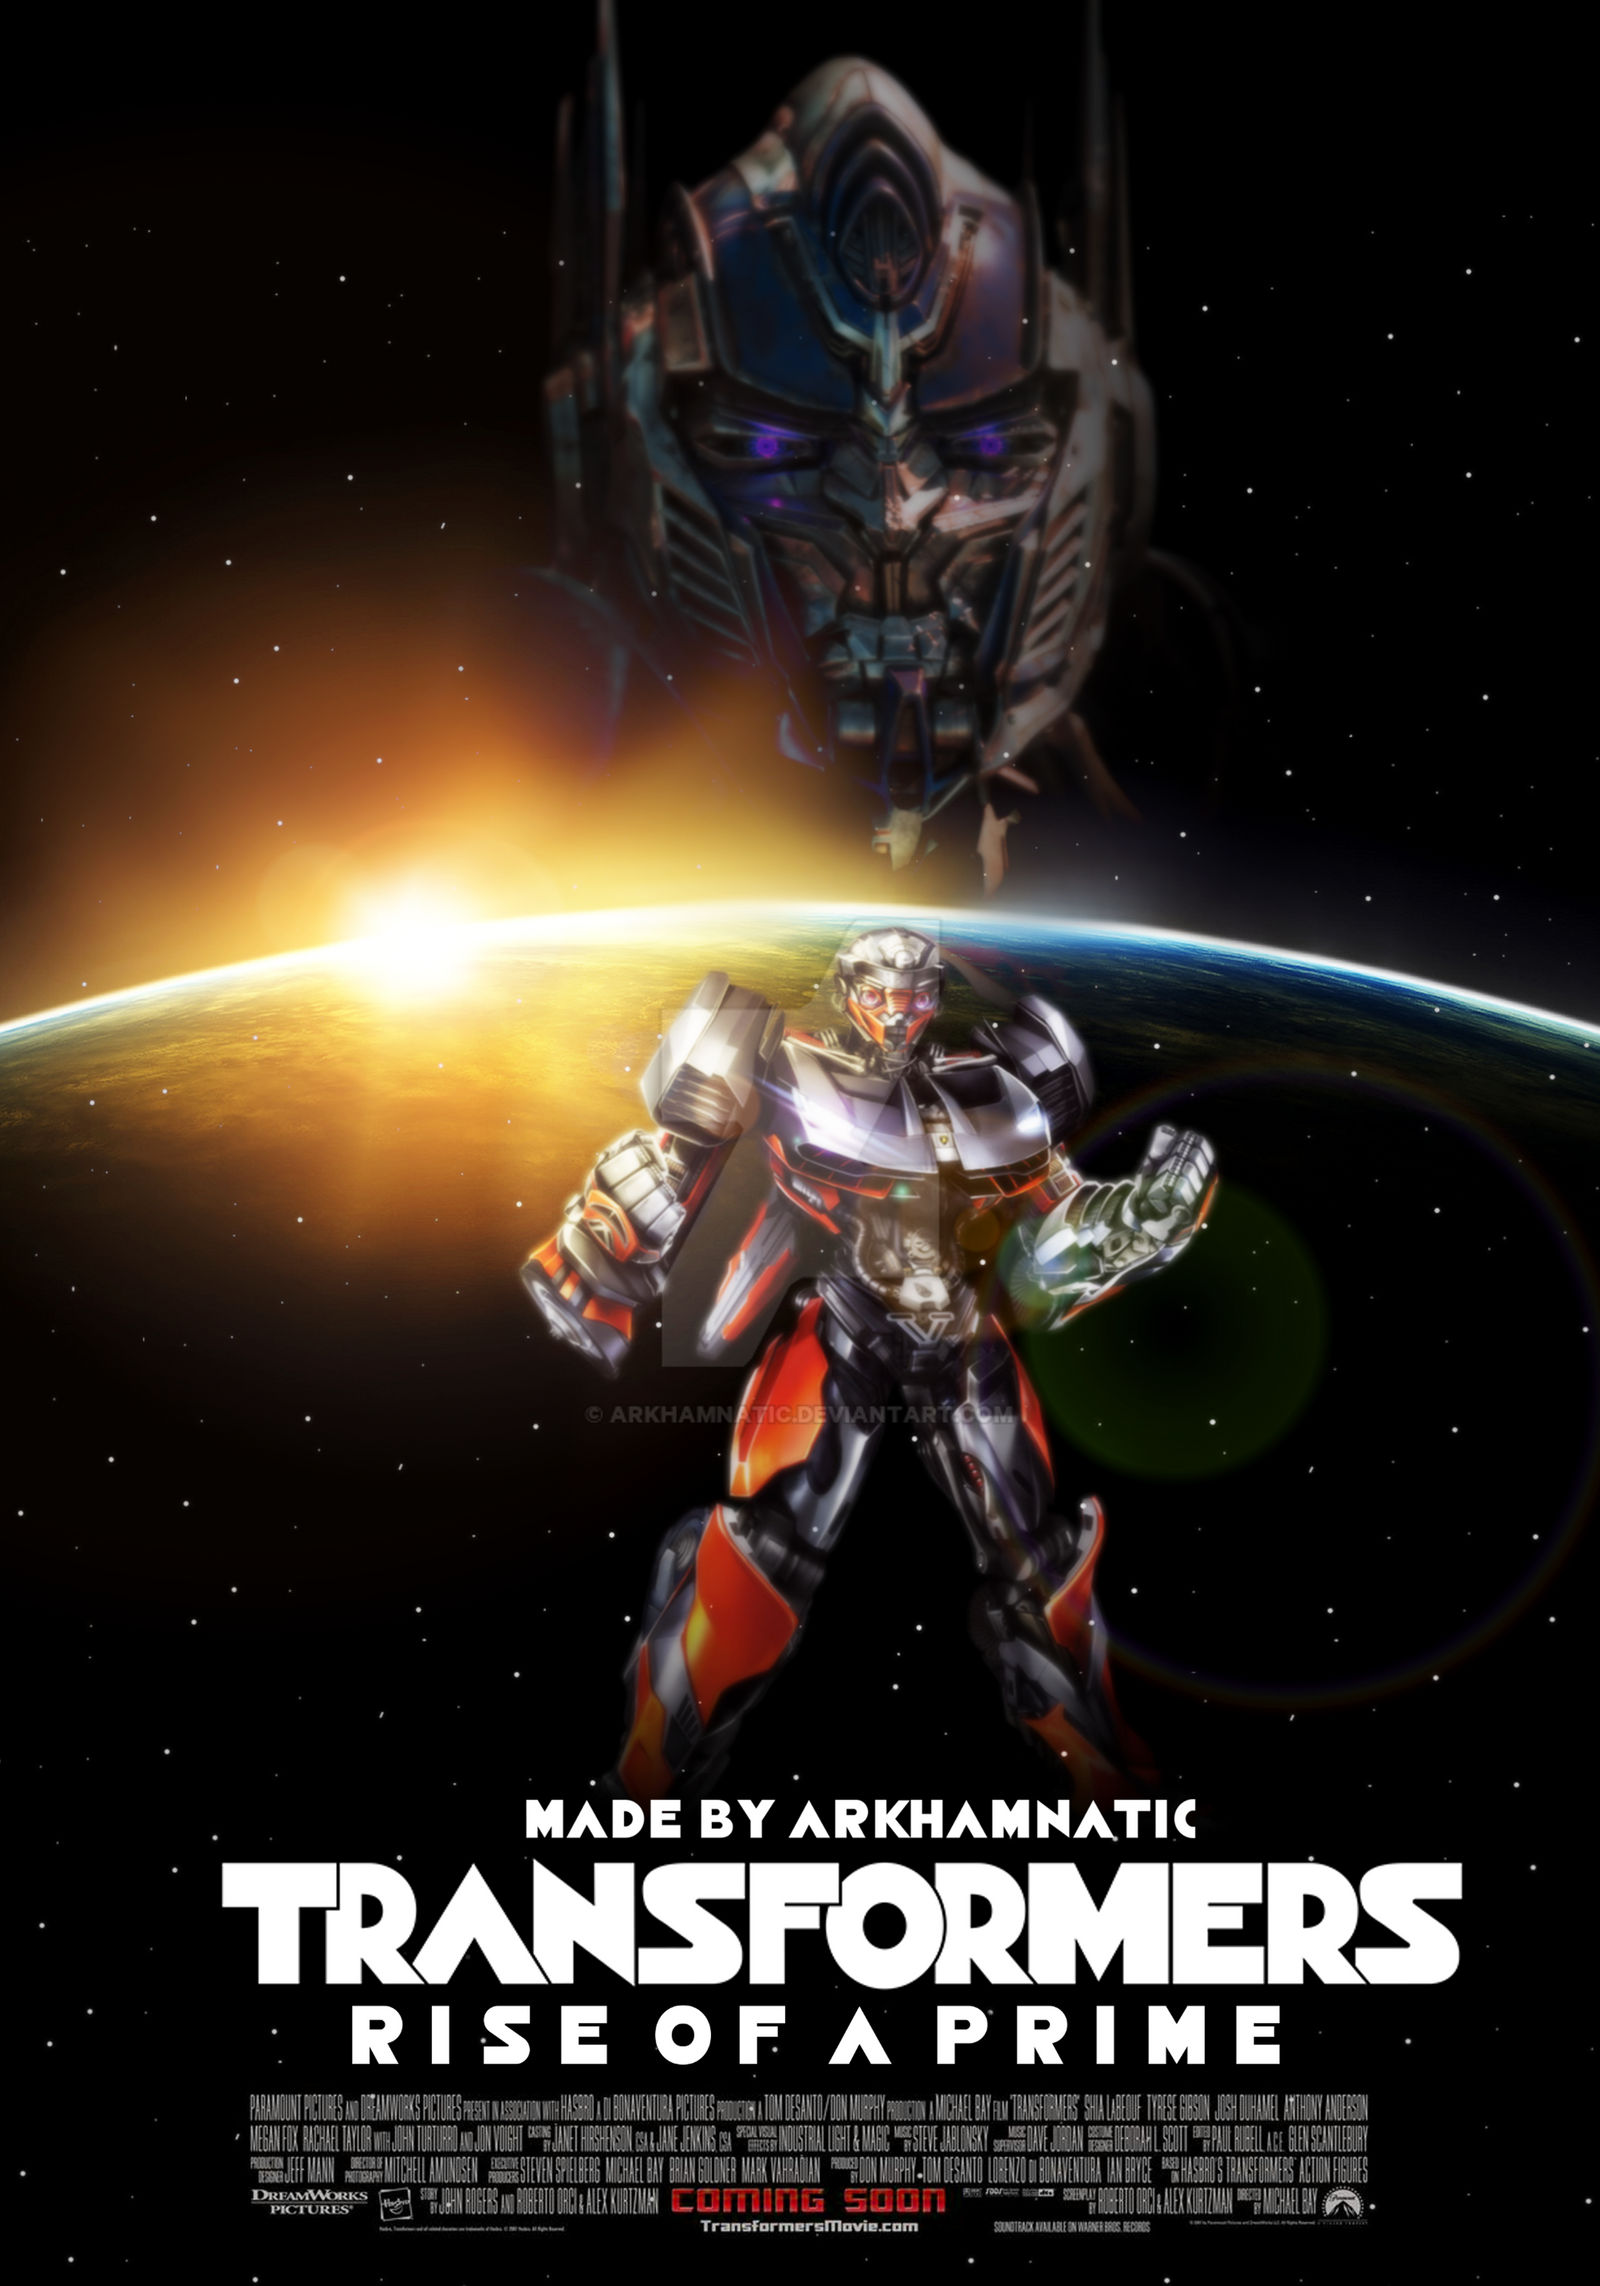 Capa Filme Transformers by Reborns on DeviantArt